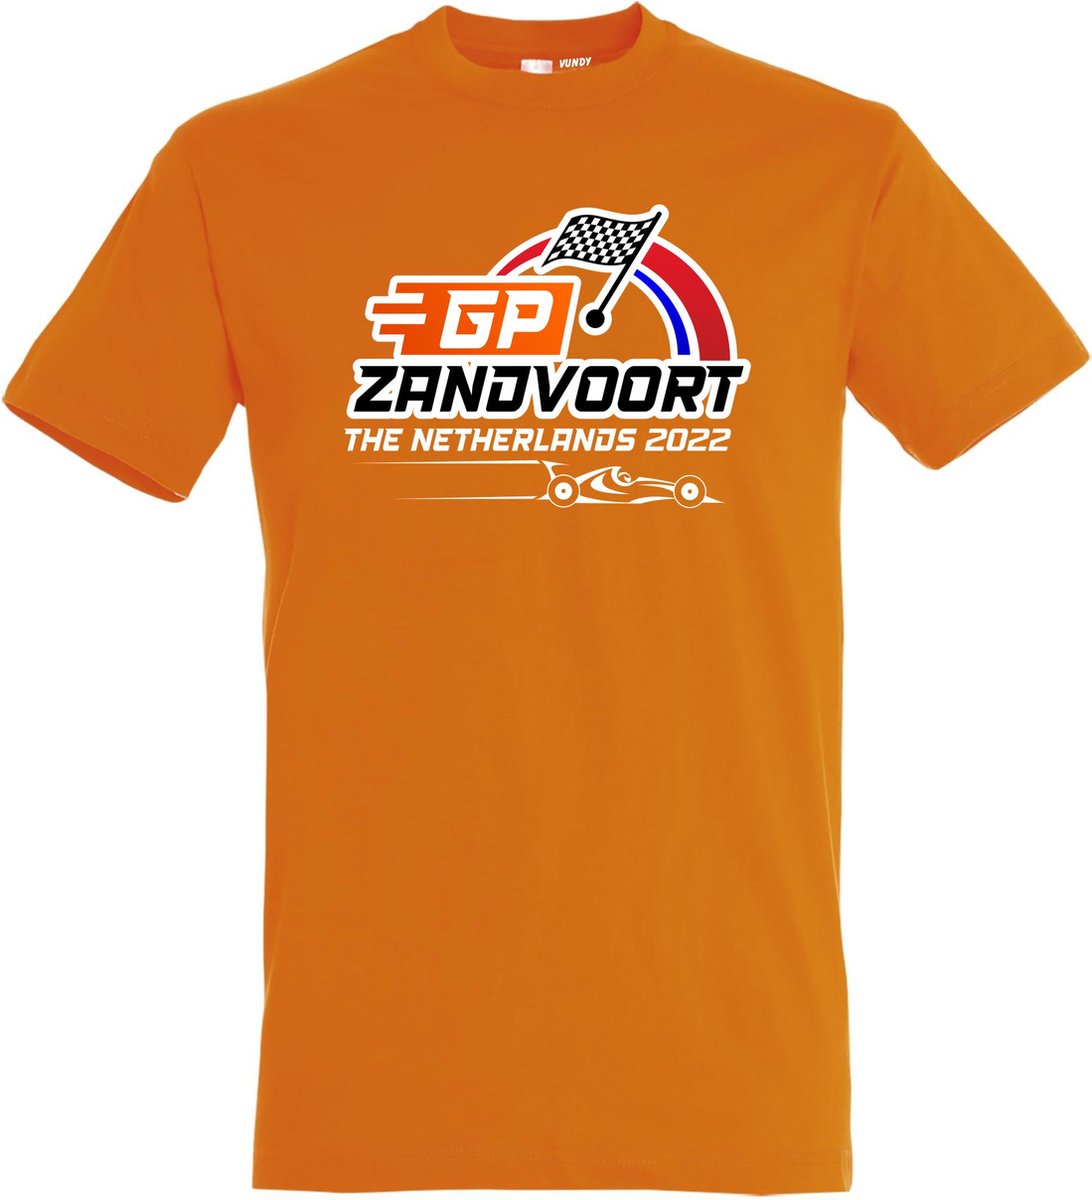 T-shirt vlag GP Zandvoort 2022 | Max Verstappen / Red Bull Racing / Formule 1 fan | Grand Prix Circuit Zandvoort 2022 | oranje shirt | Oranje | maat M